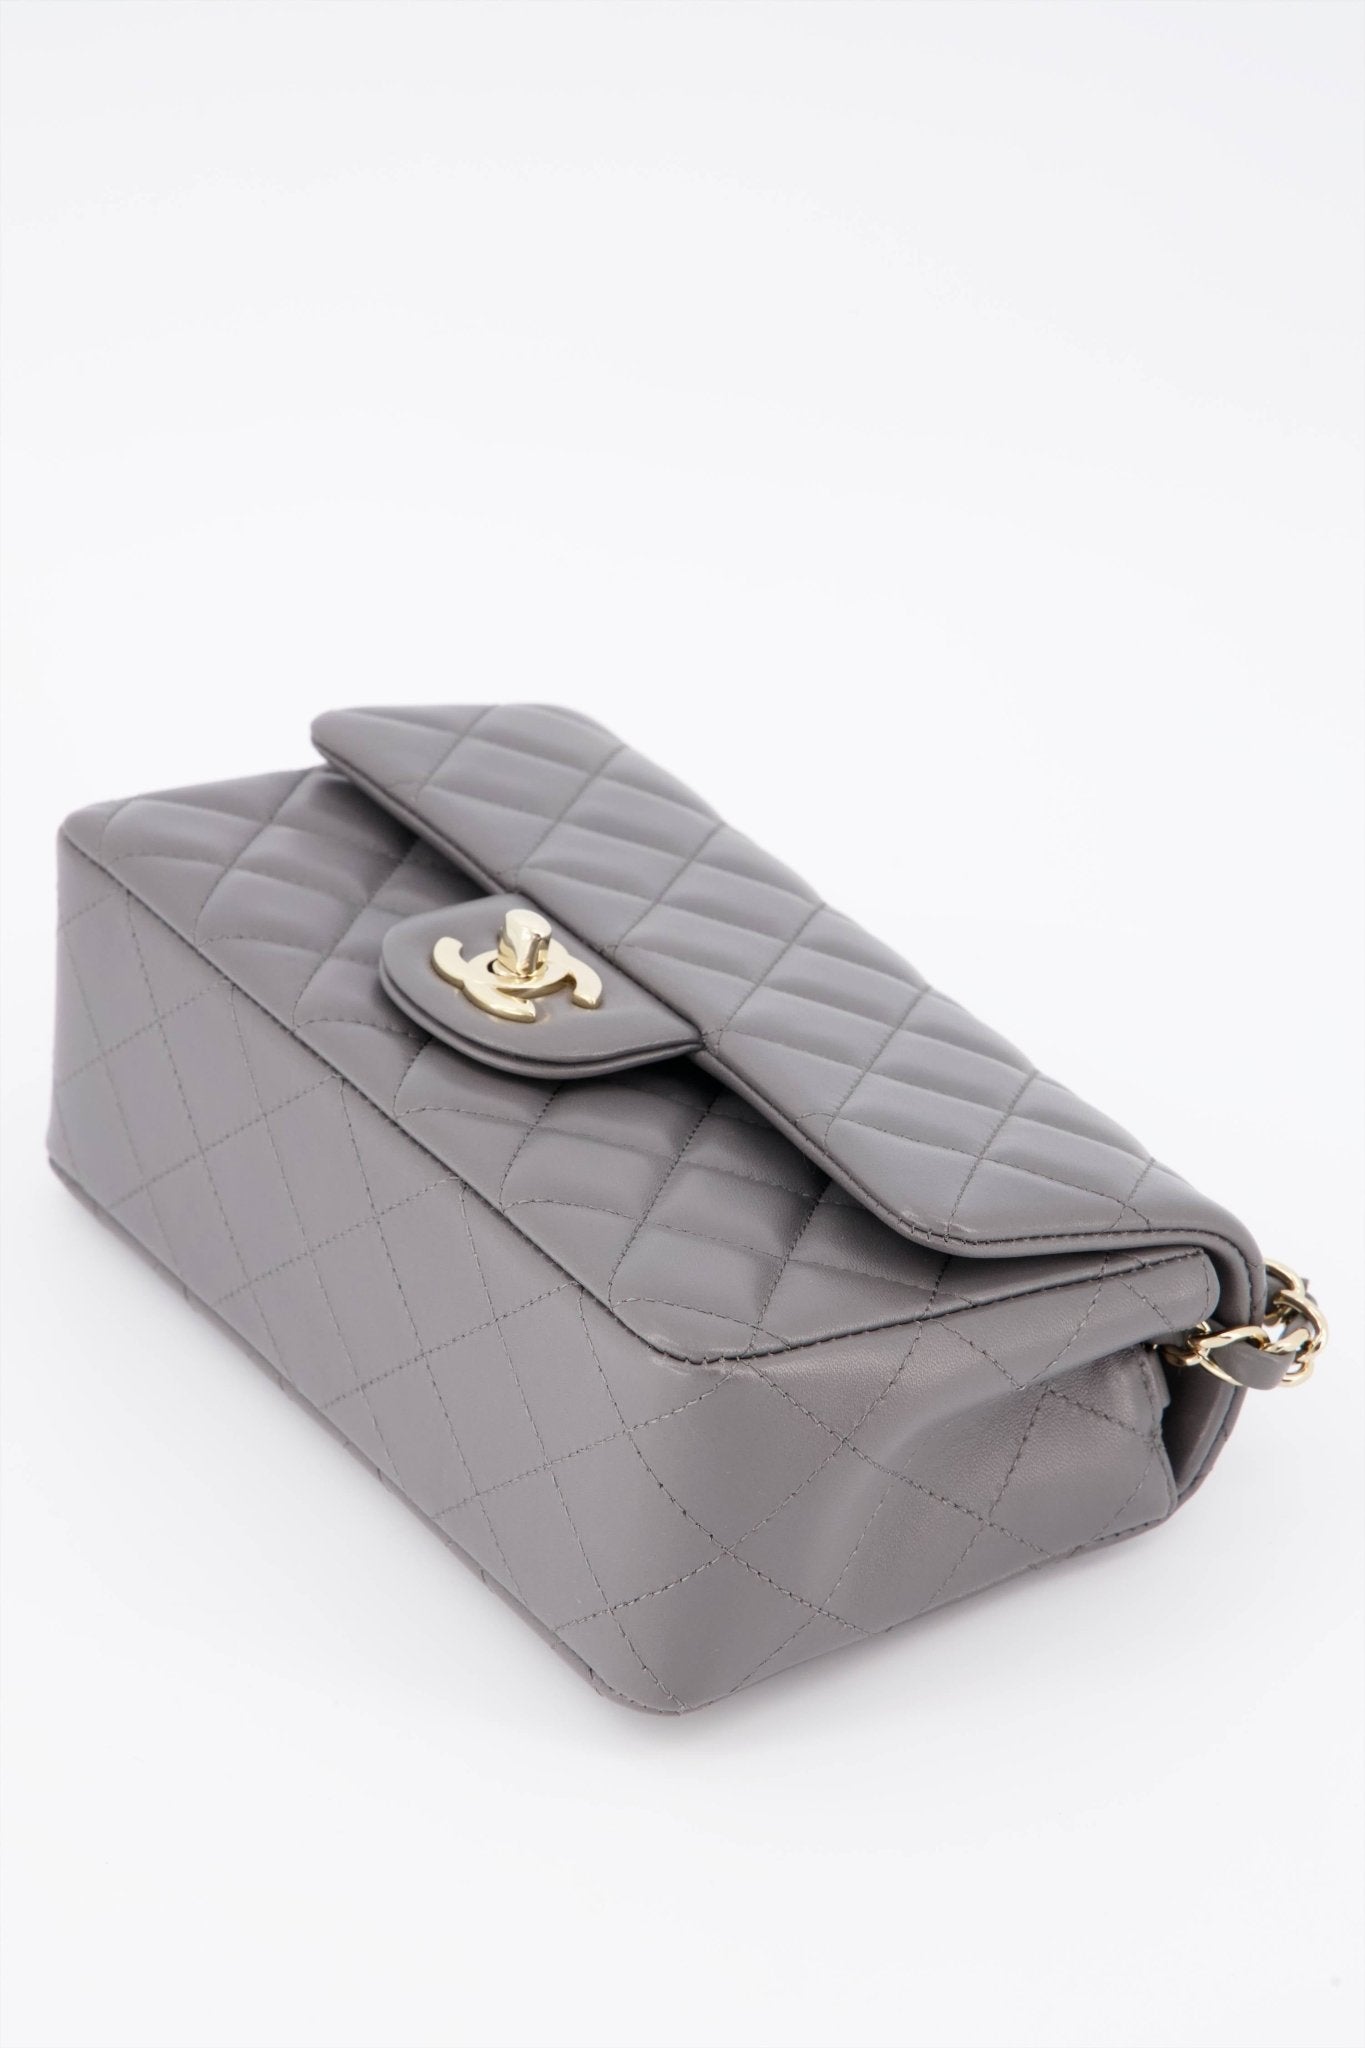 chanel gray classic flap bag